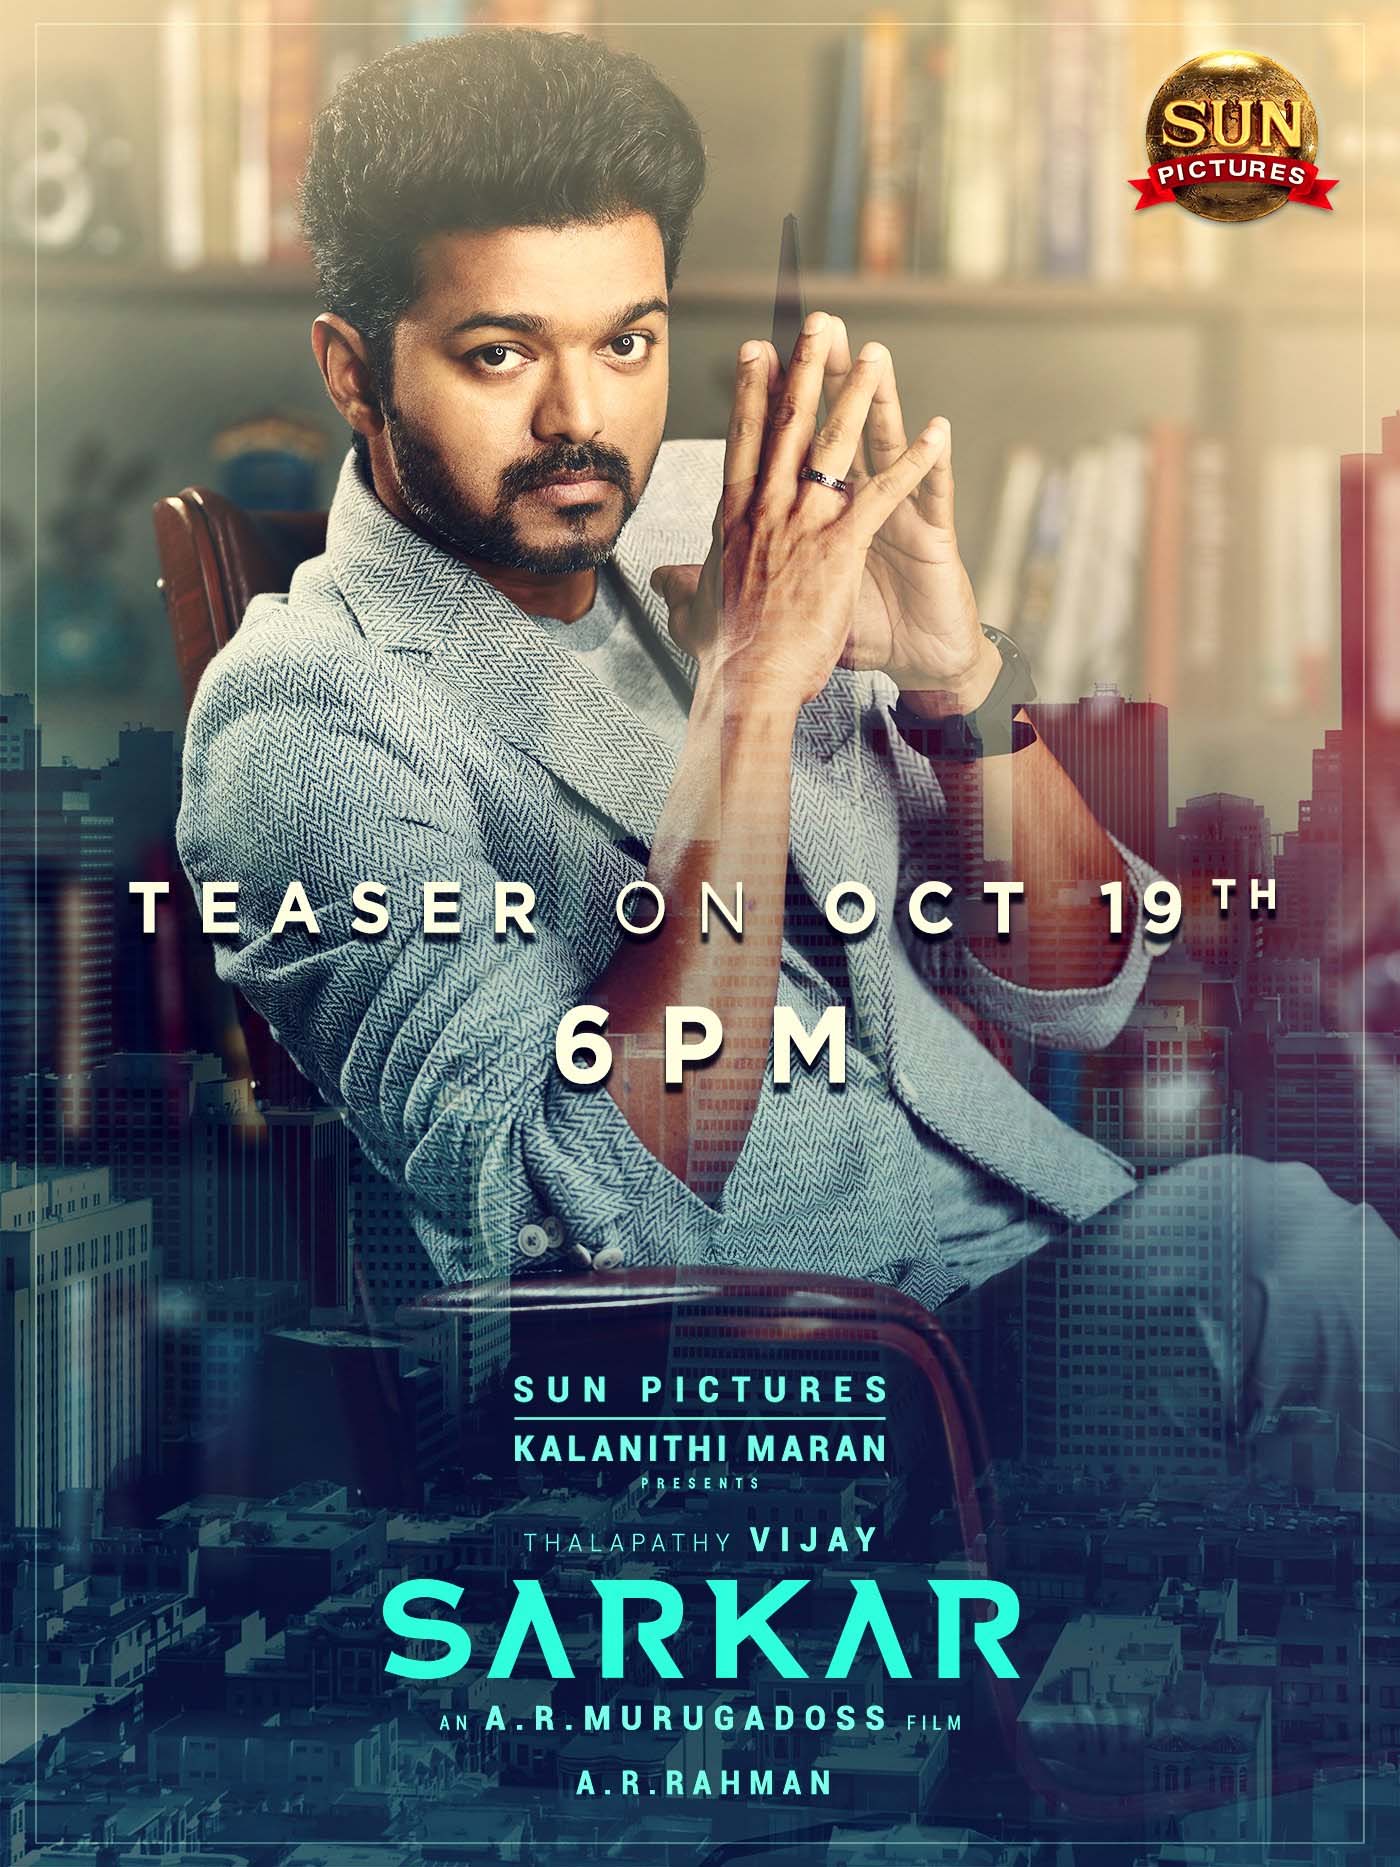 Vijay in Sarkar Teaser Release Date on 19th October Poster 